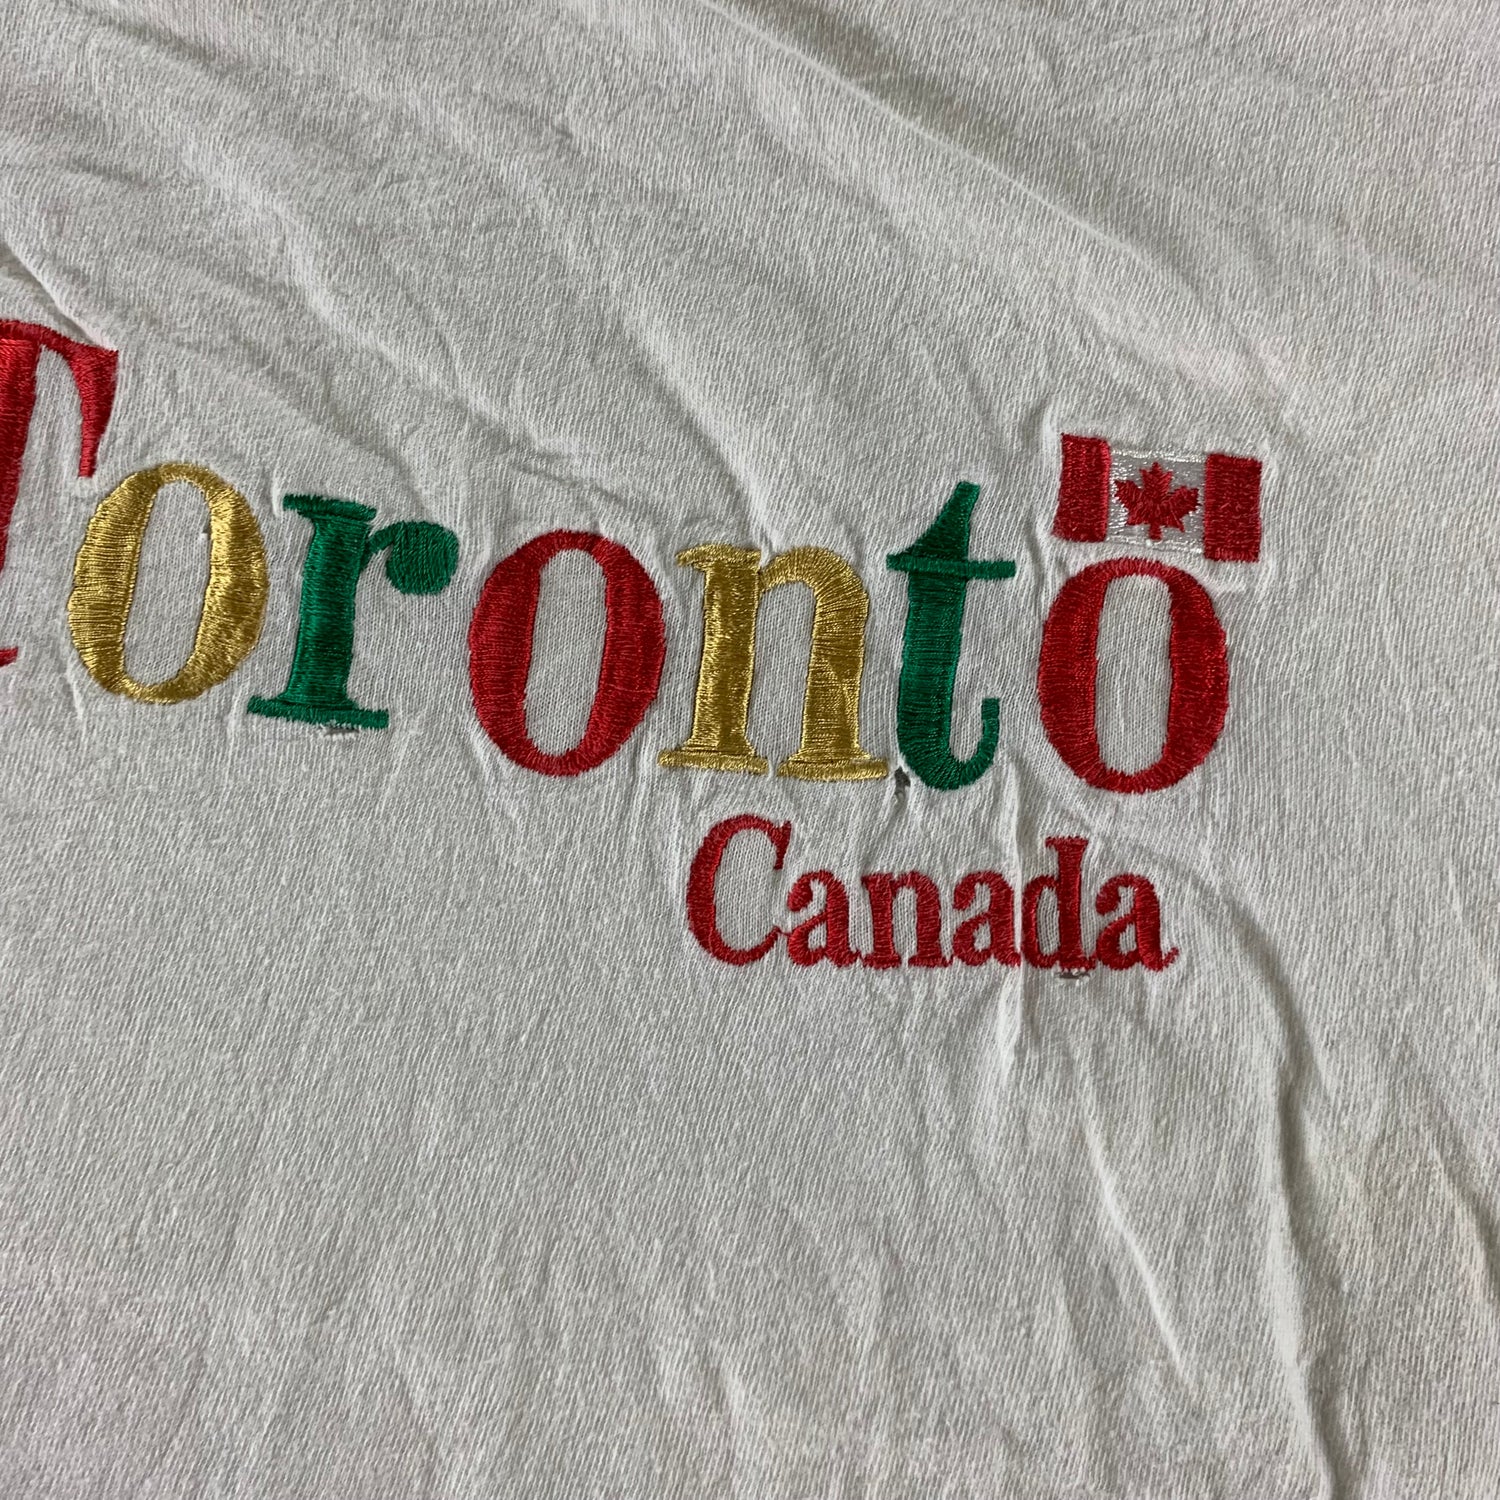 Vintage 1990s Toronto Canada T-shirt size Large